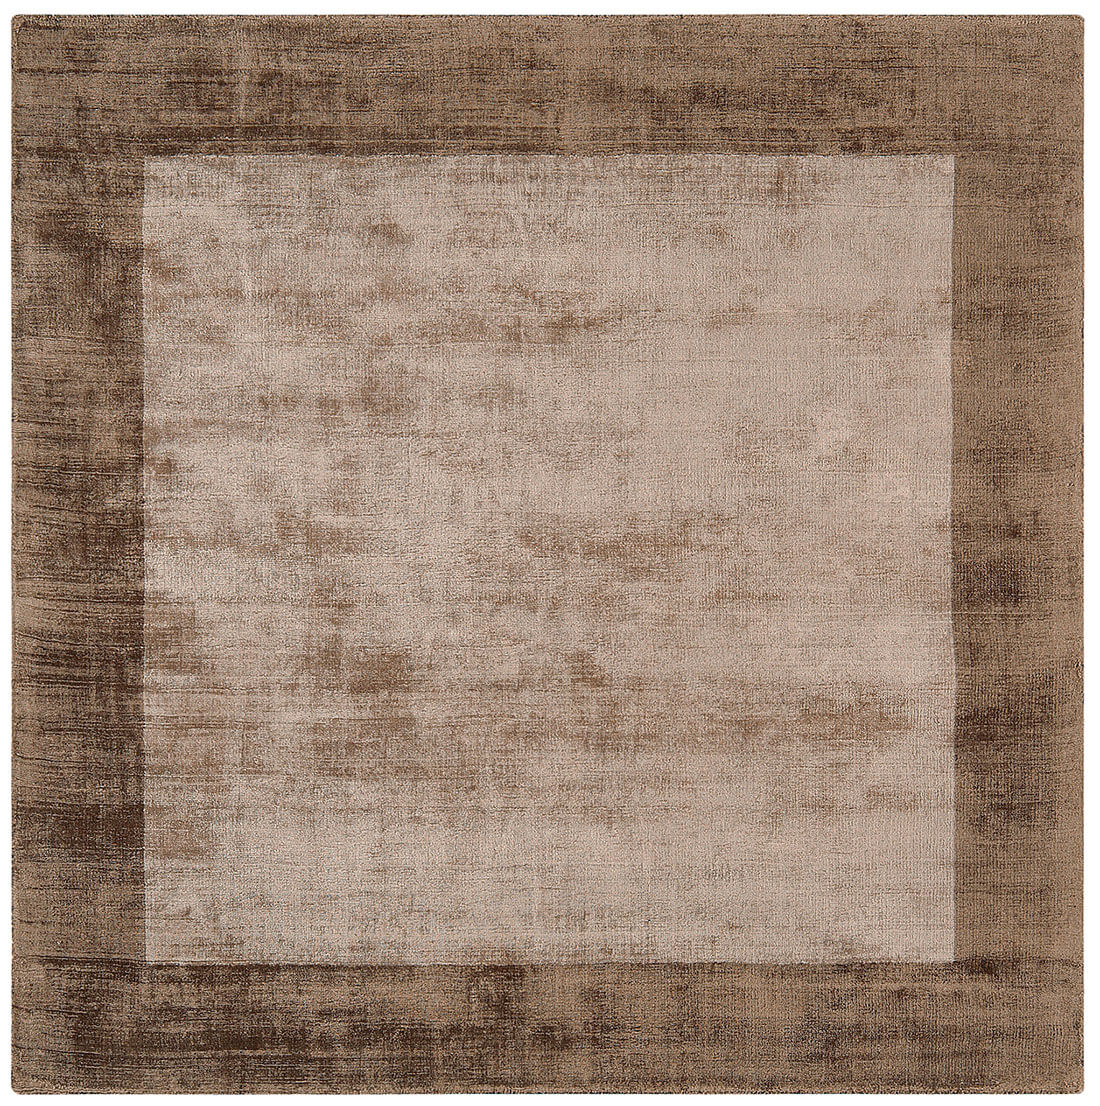 plain beige rug with border